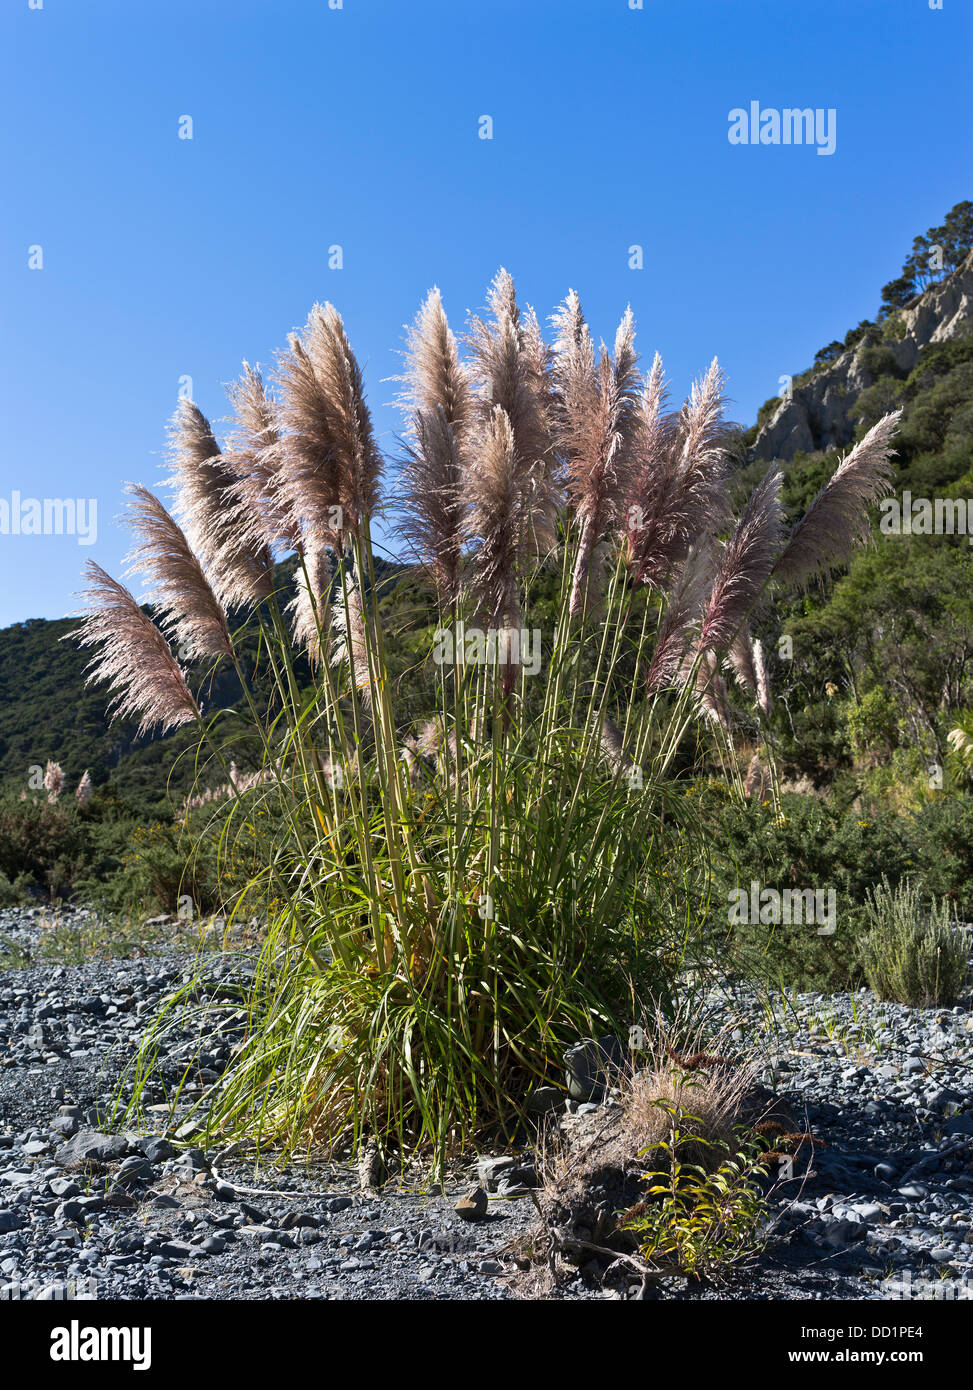 dh Toetoe AUSTRODERIA FLORA New Zealand Toi Toi grass clump Stock Photo